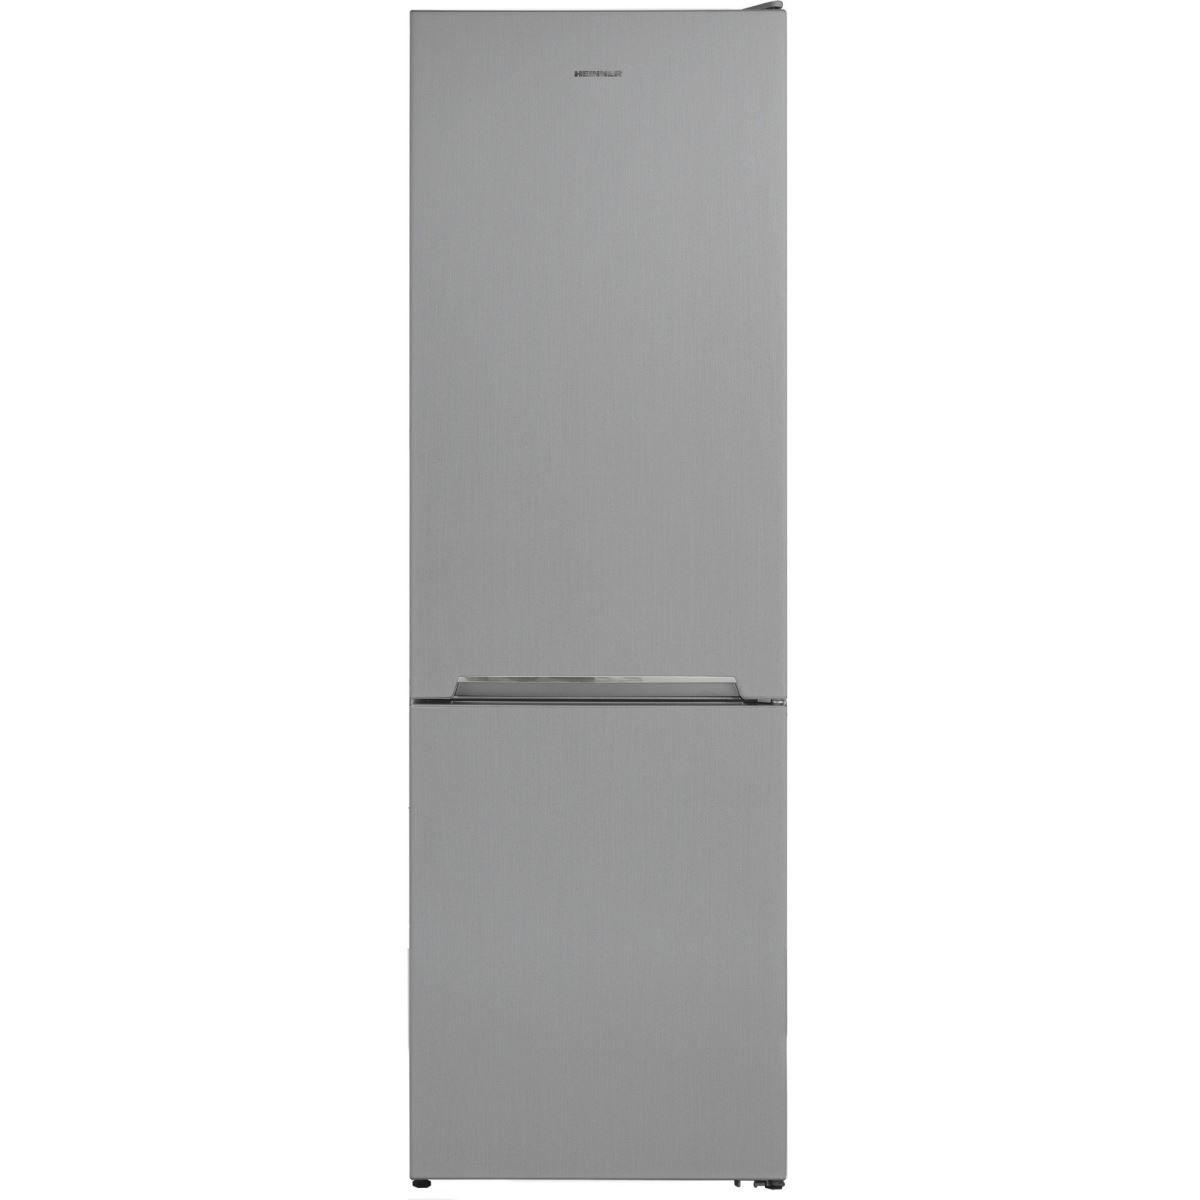 Combina frigorifica Heinner HC-V336XA+, 336 l, H 186 cm, Tehnologie Less Frost, Control mecanic cu termostat ajustabil, Argintiu